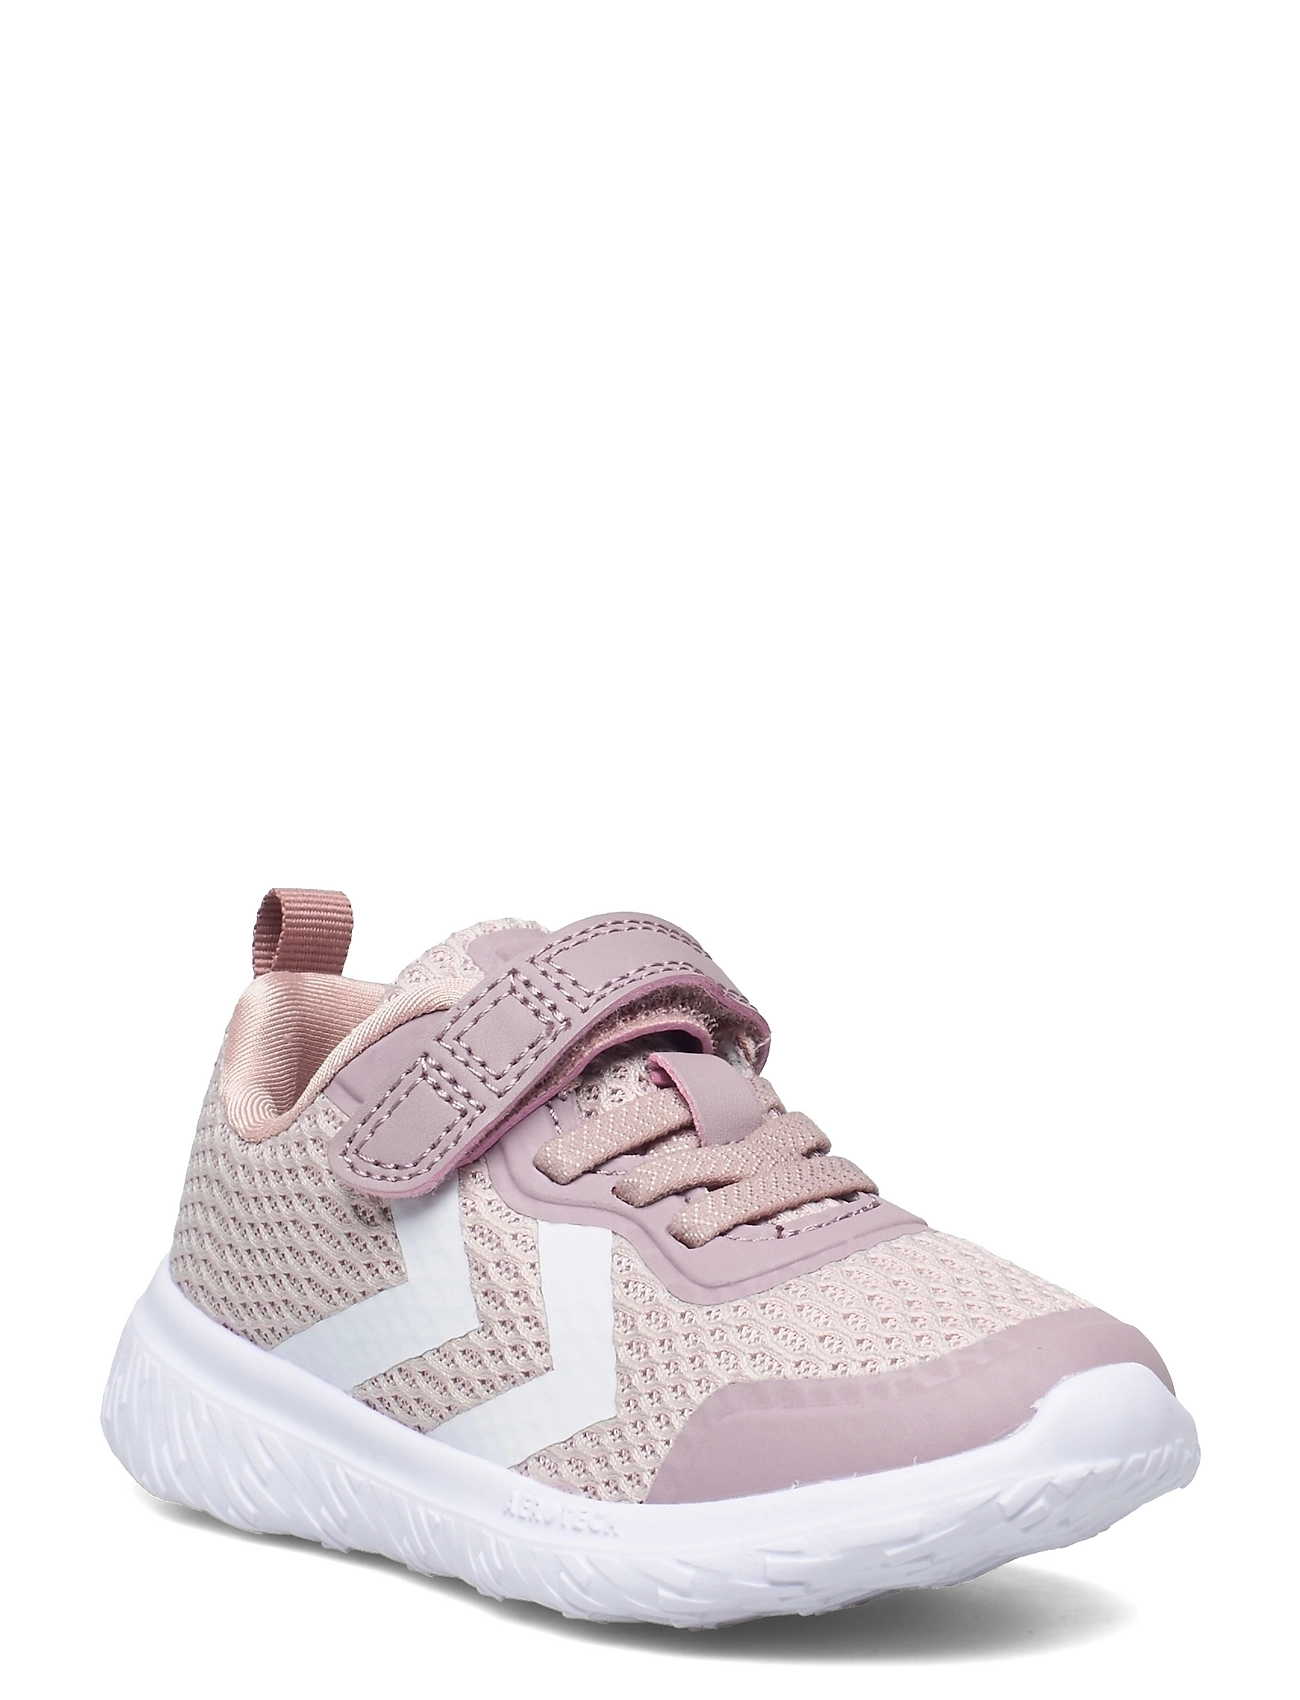 Actus Ml Recycled Infant Sport Sneakers Low-top Sneakers Pink Hummel